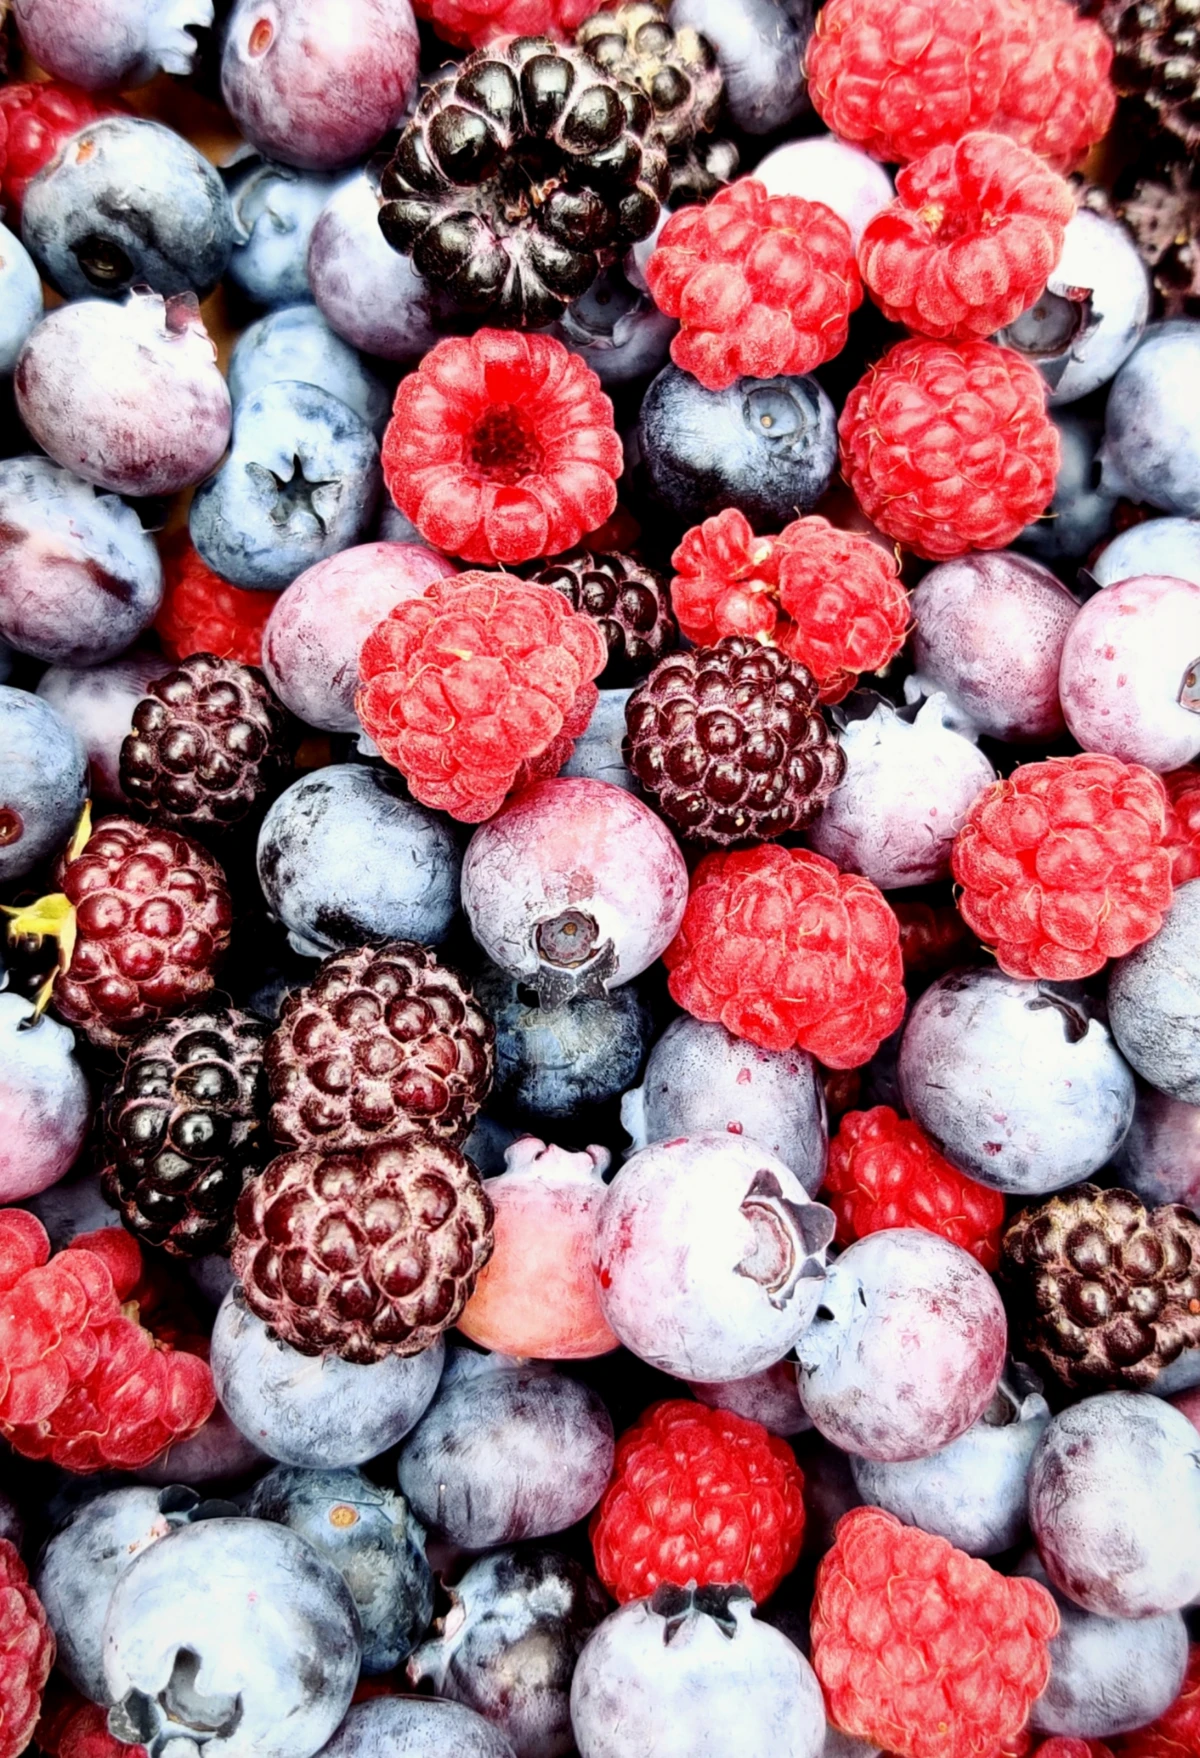 different berries